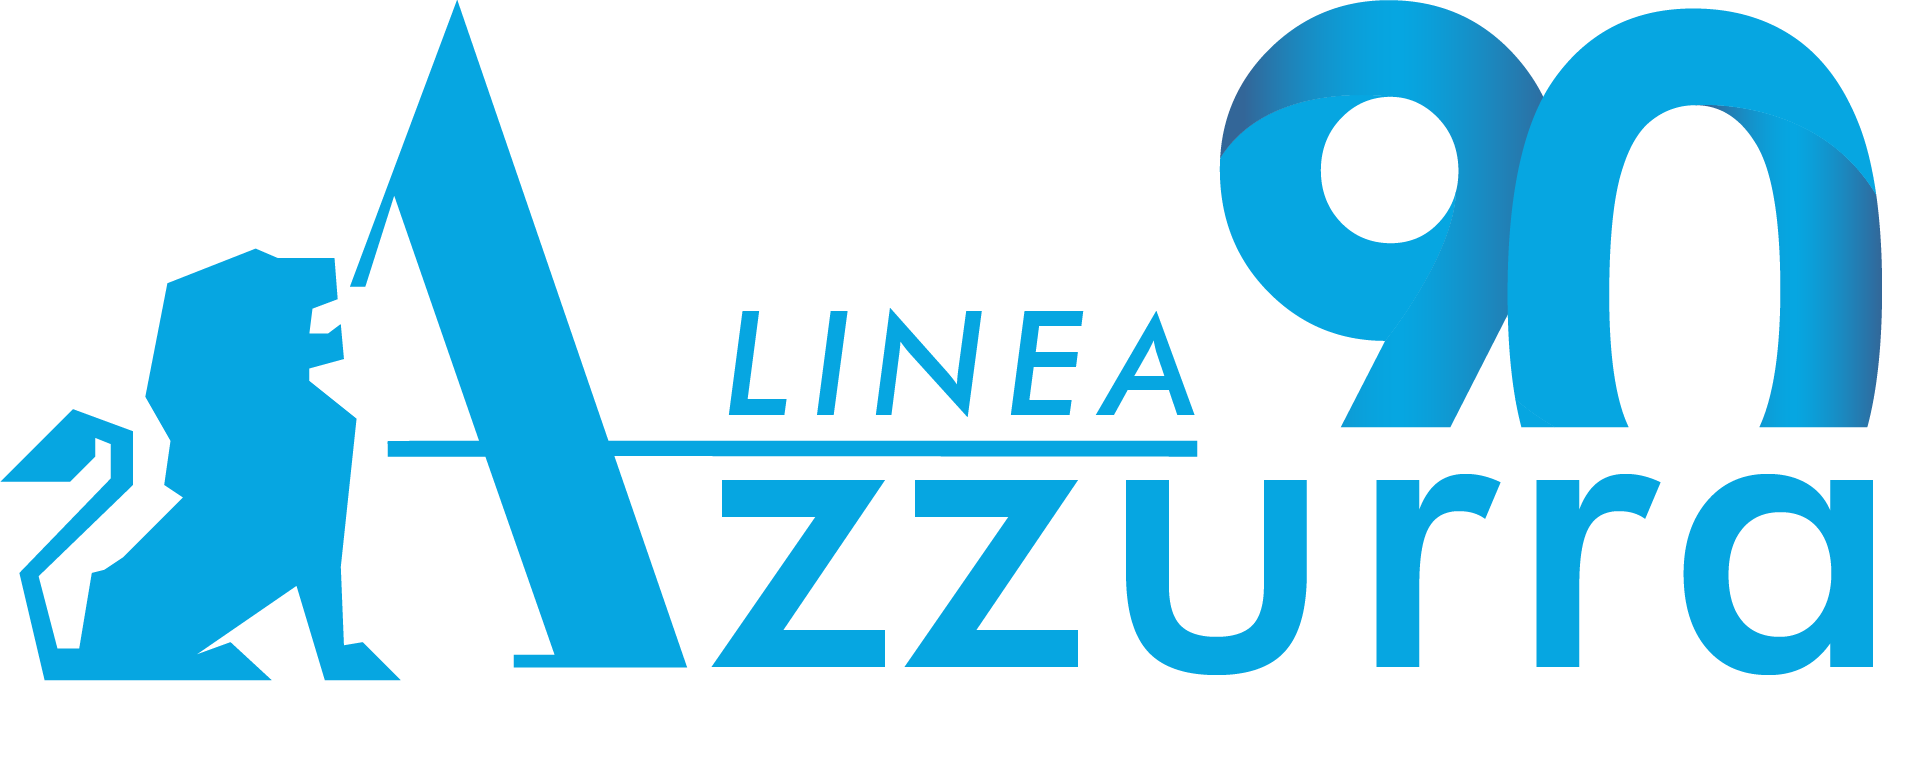 Linea Azzurra